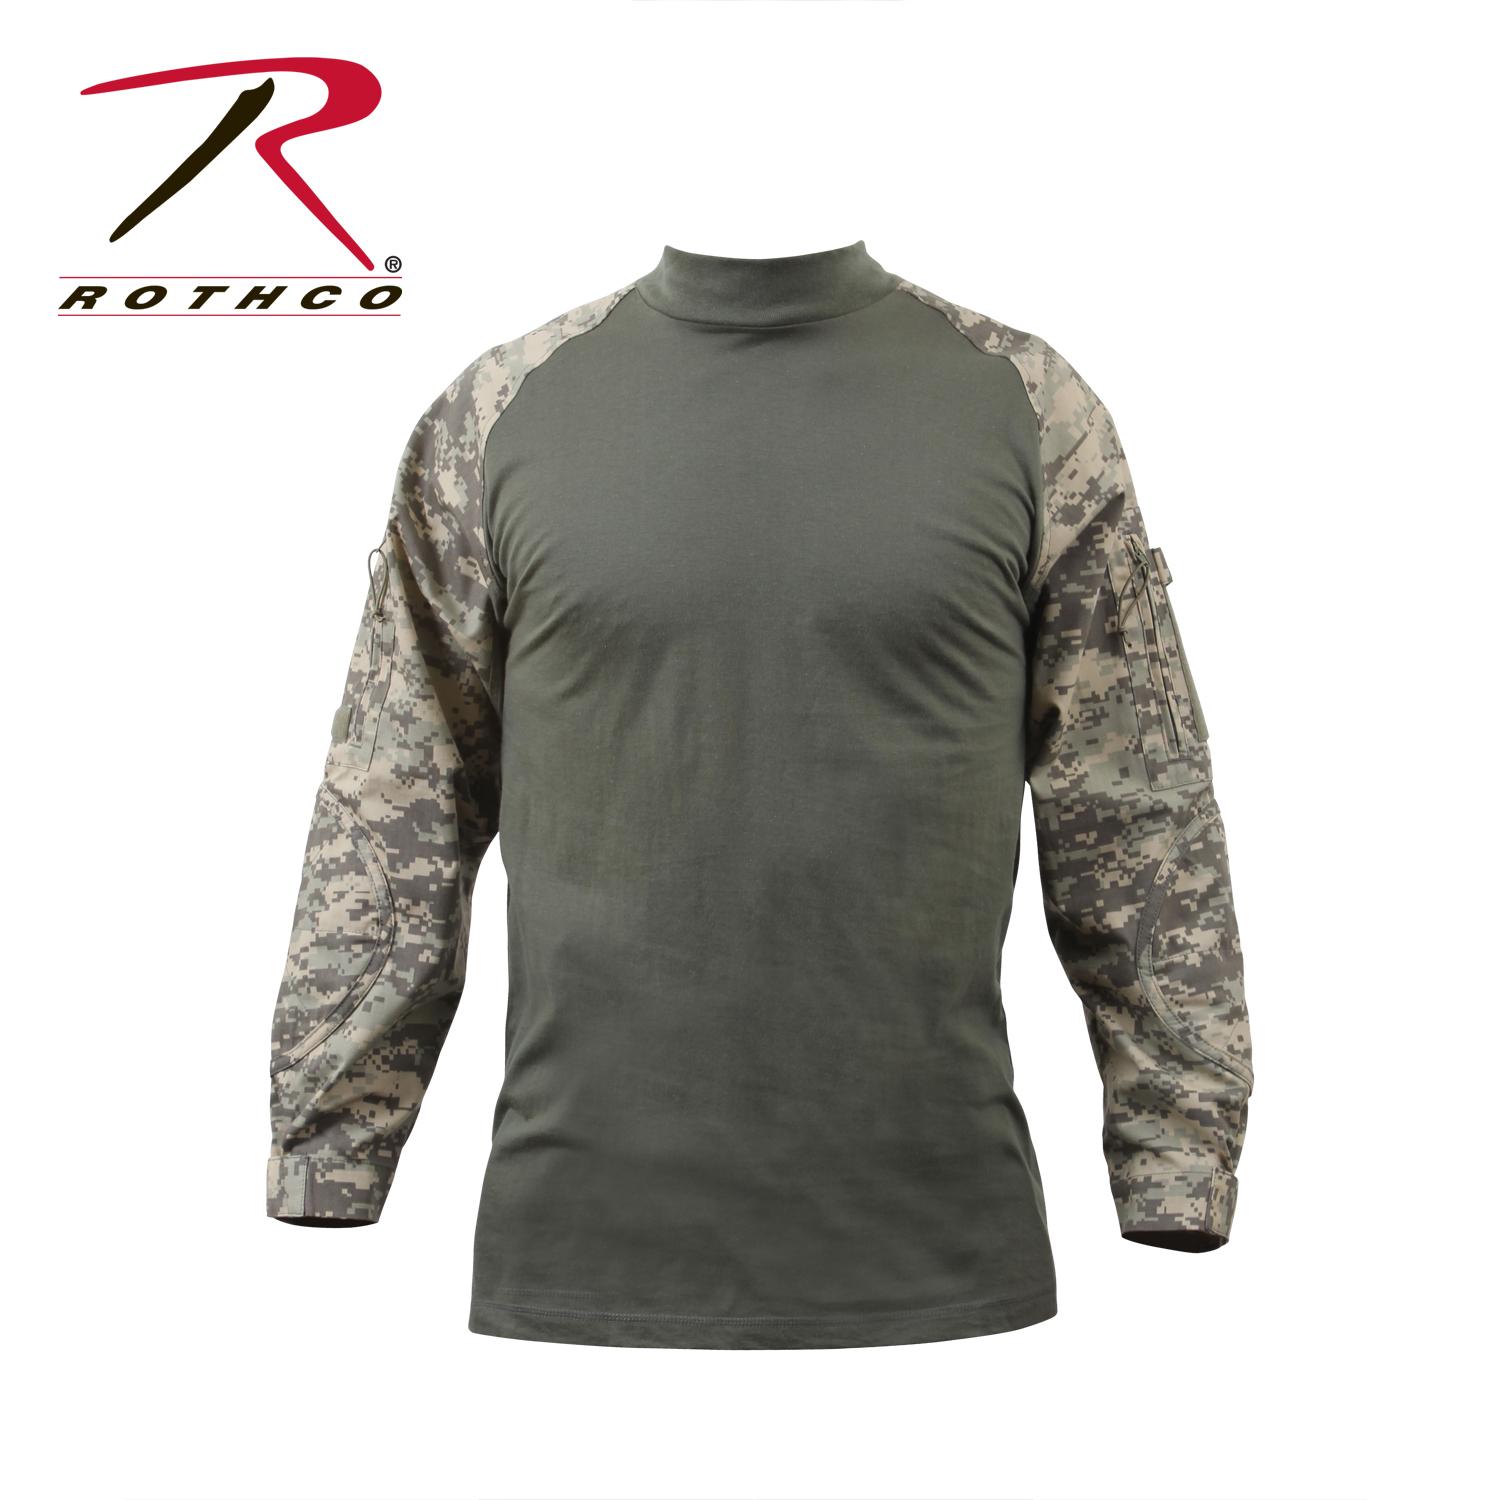 Combat shirt-l/s - Shirts & sweaters